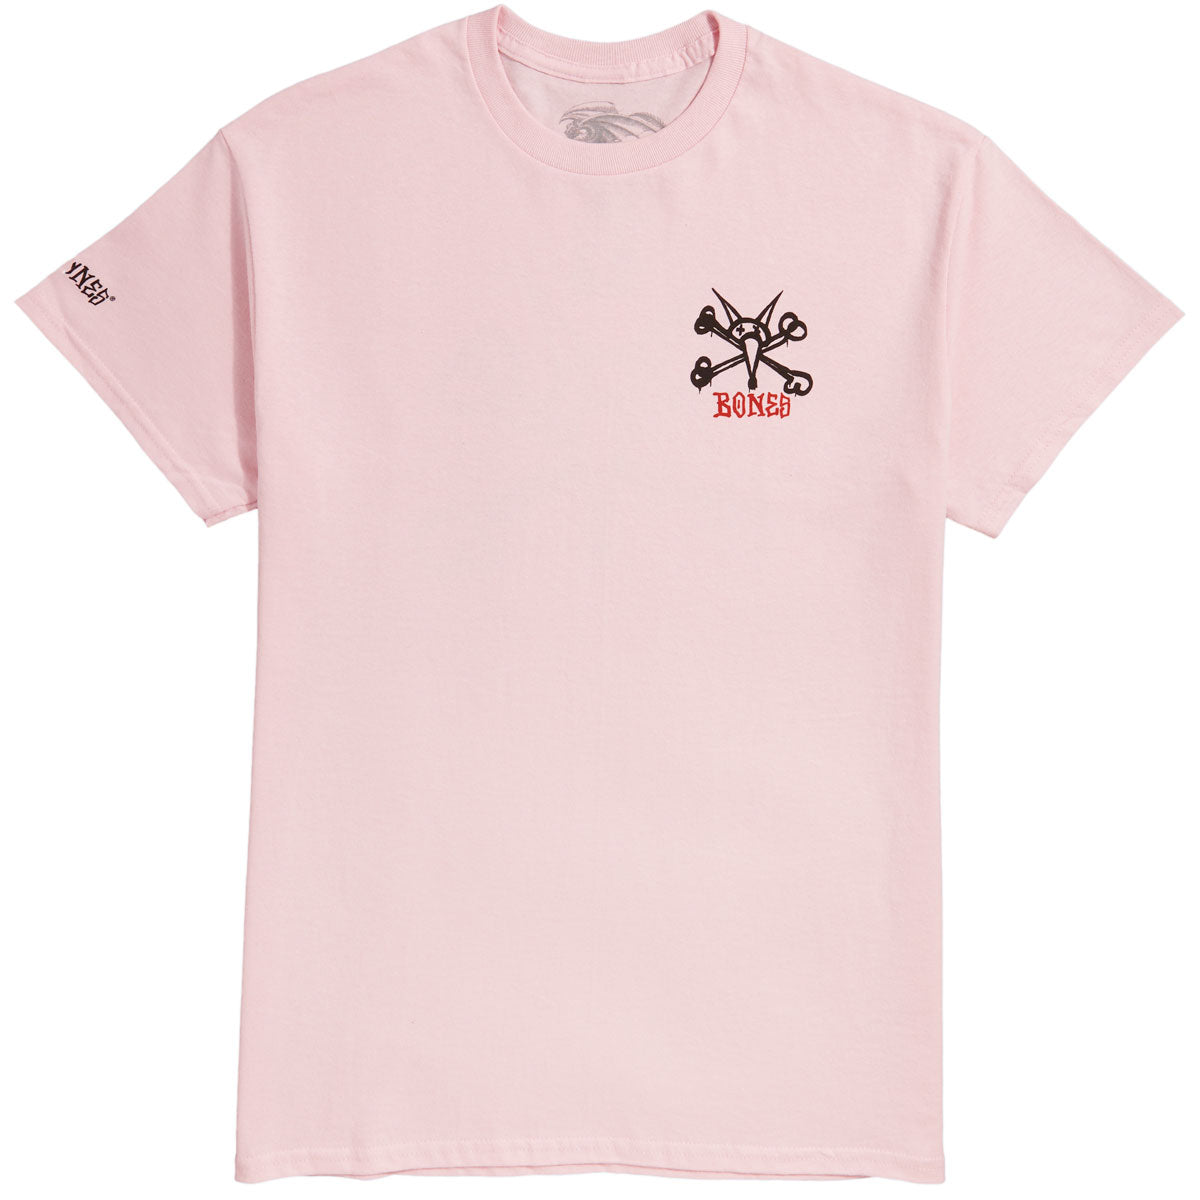 Powell-Peralta Rat Bones T-Shirt - Light Pink image 2